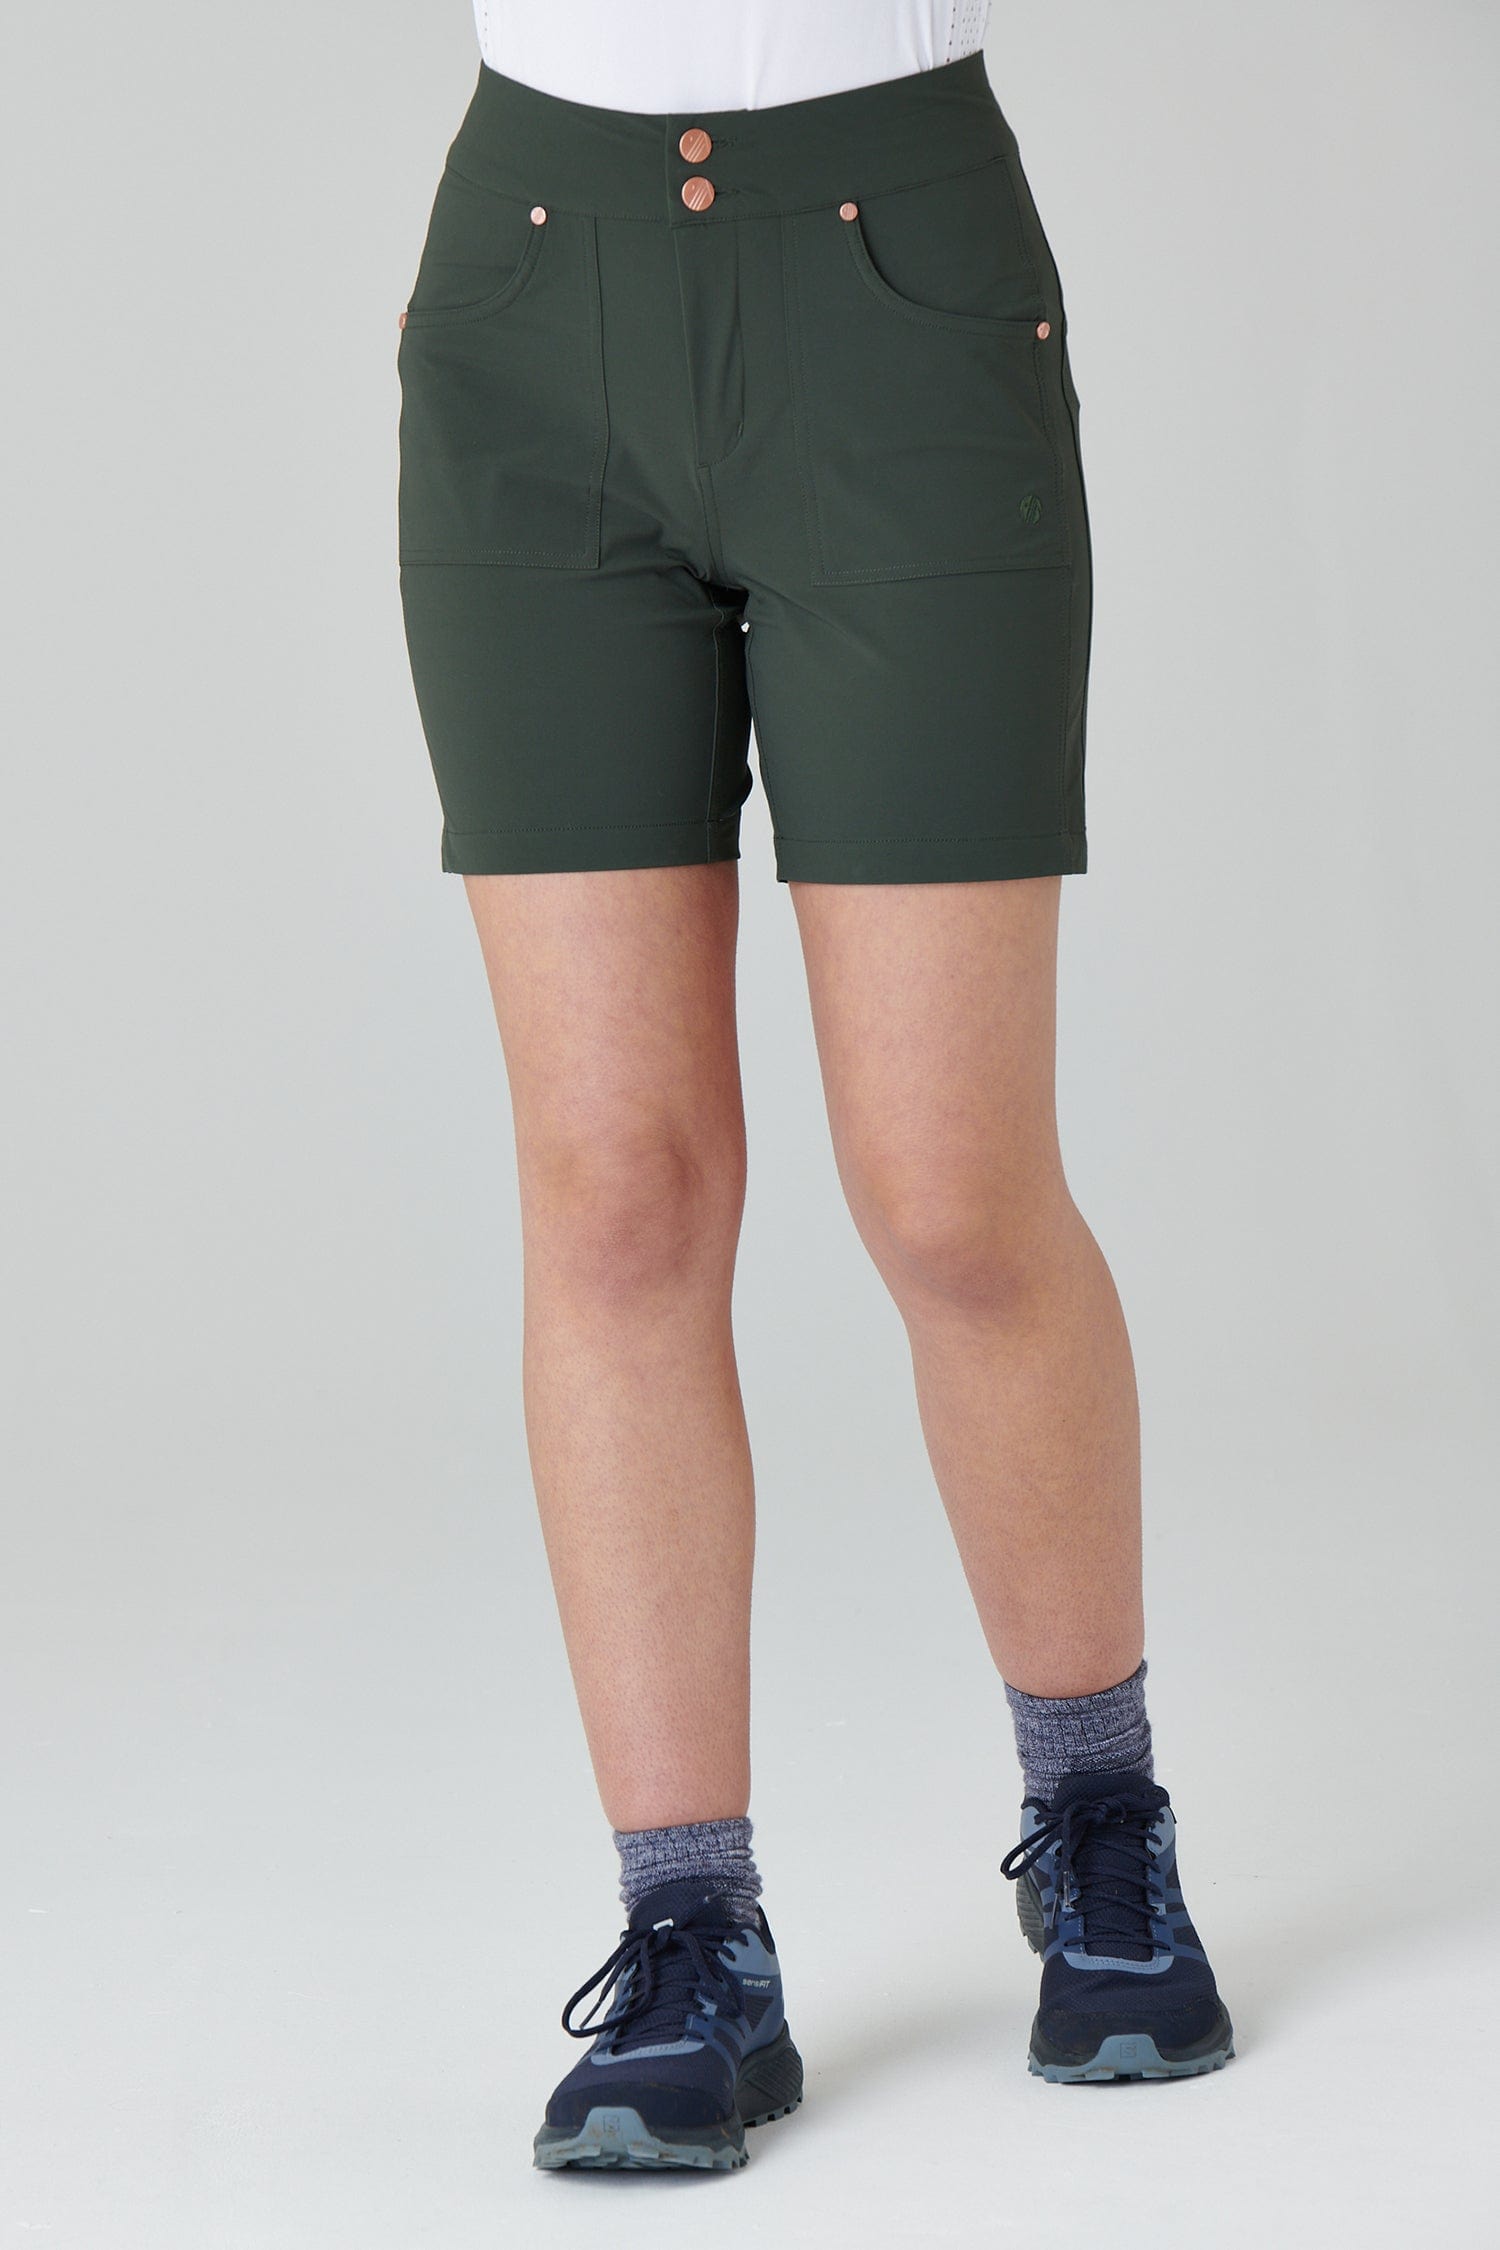 Mid Length Trek Shorts - Deep Khaki - 32 / Uk14 - Womens - Acai Outdoorwear